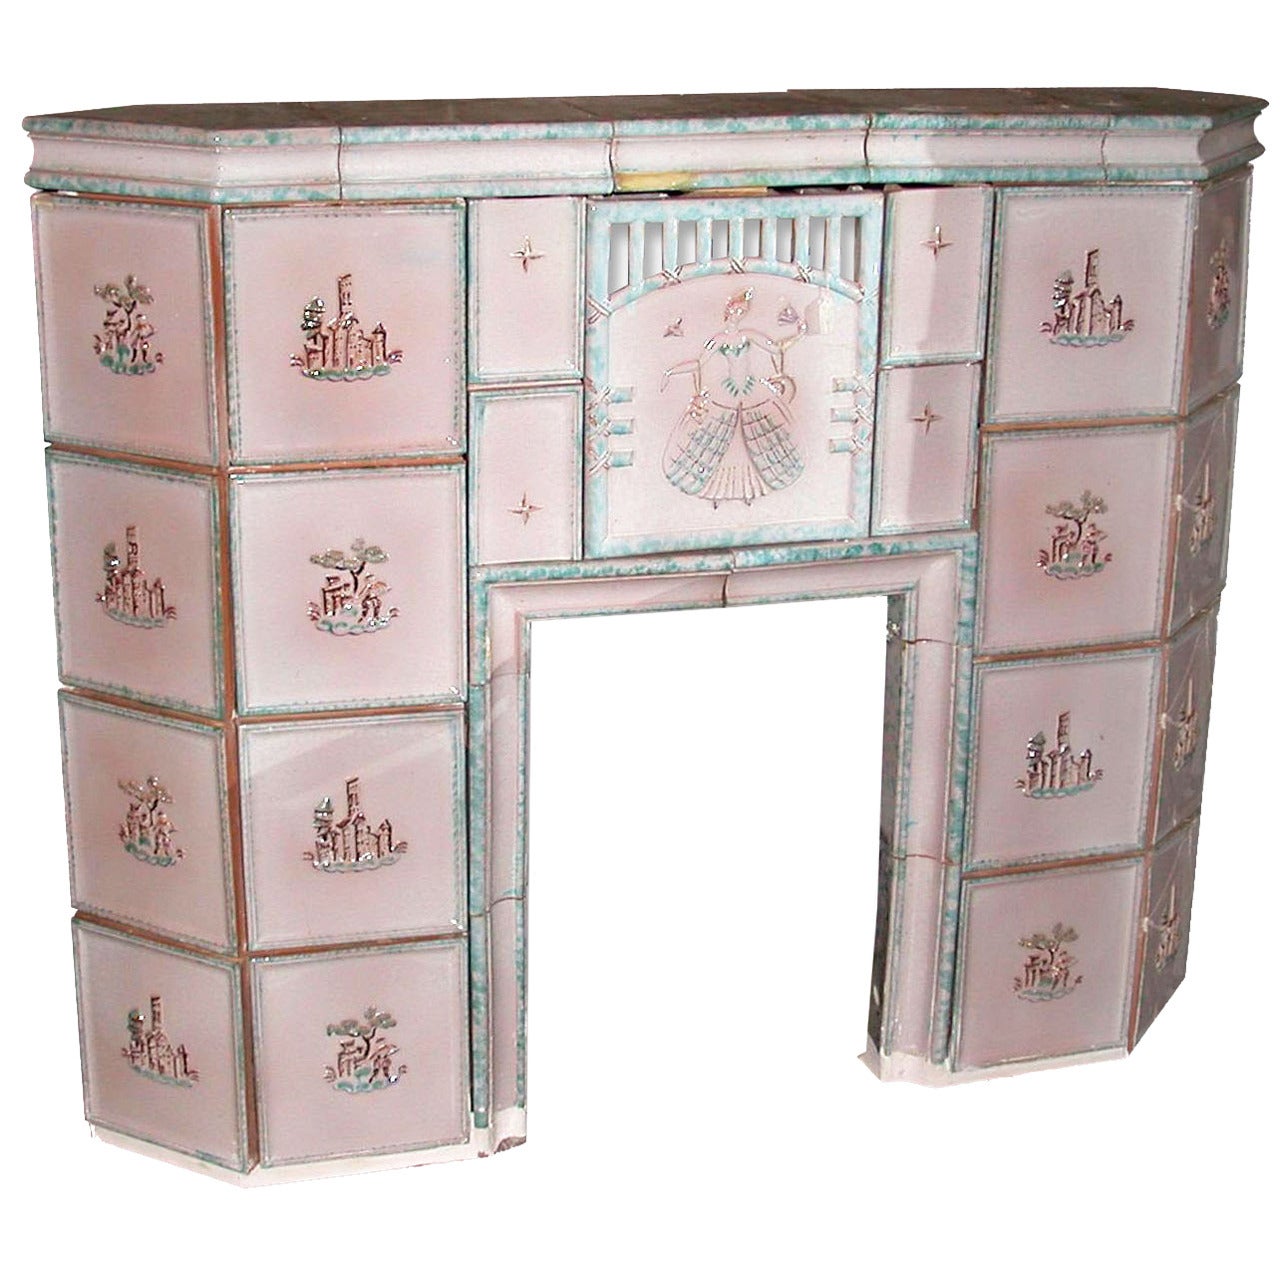 1800s Austrian Pink Tile Mantel With Scences